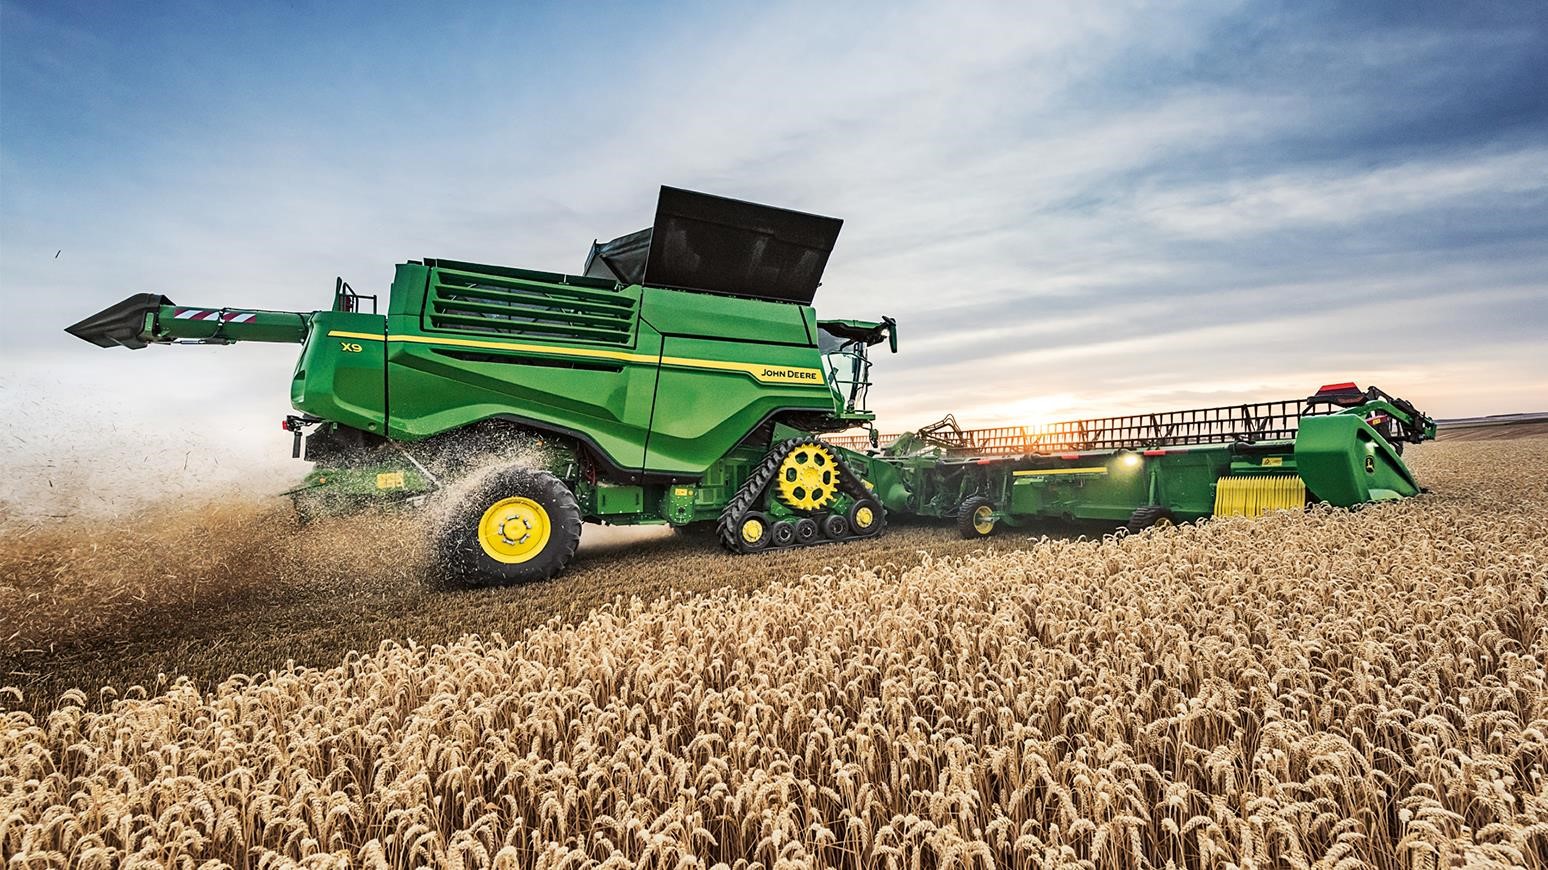 John Deere Unveils X9 Combine Harvester, Advanced Concepts At ...